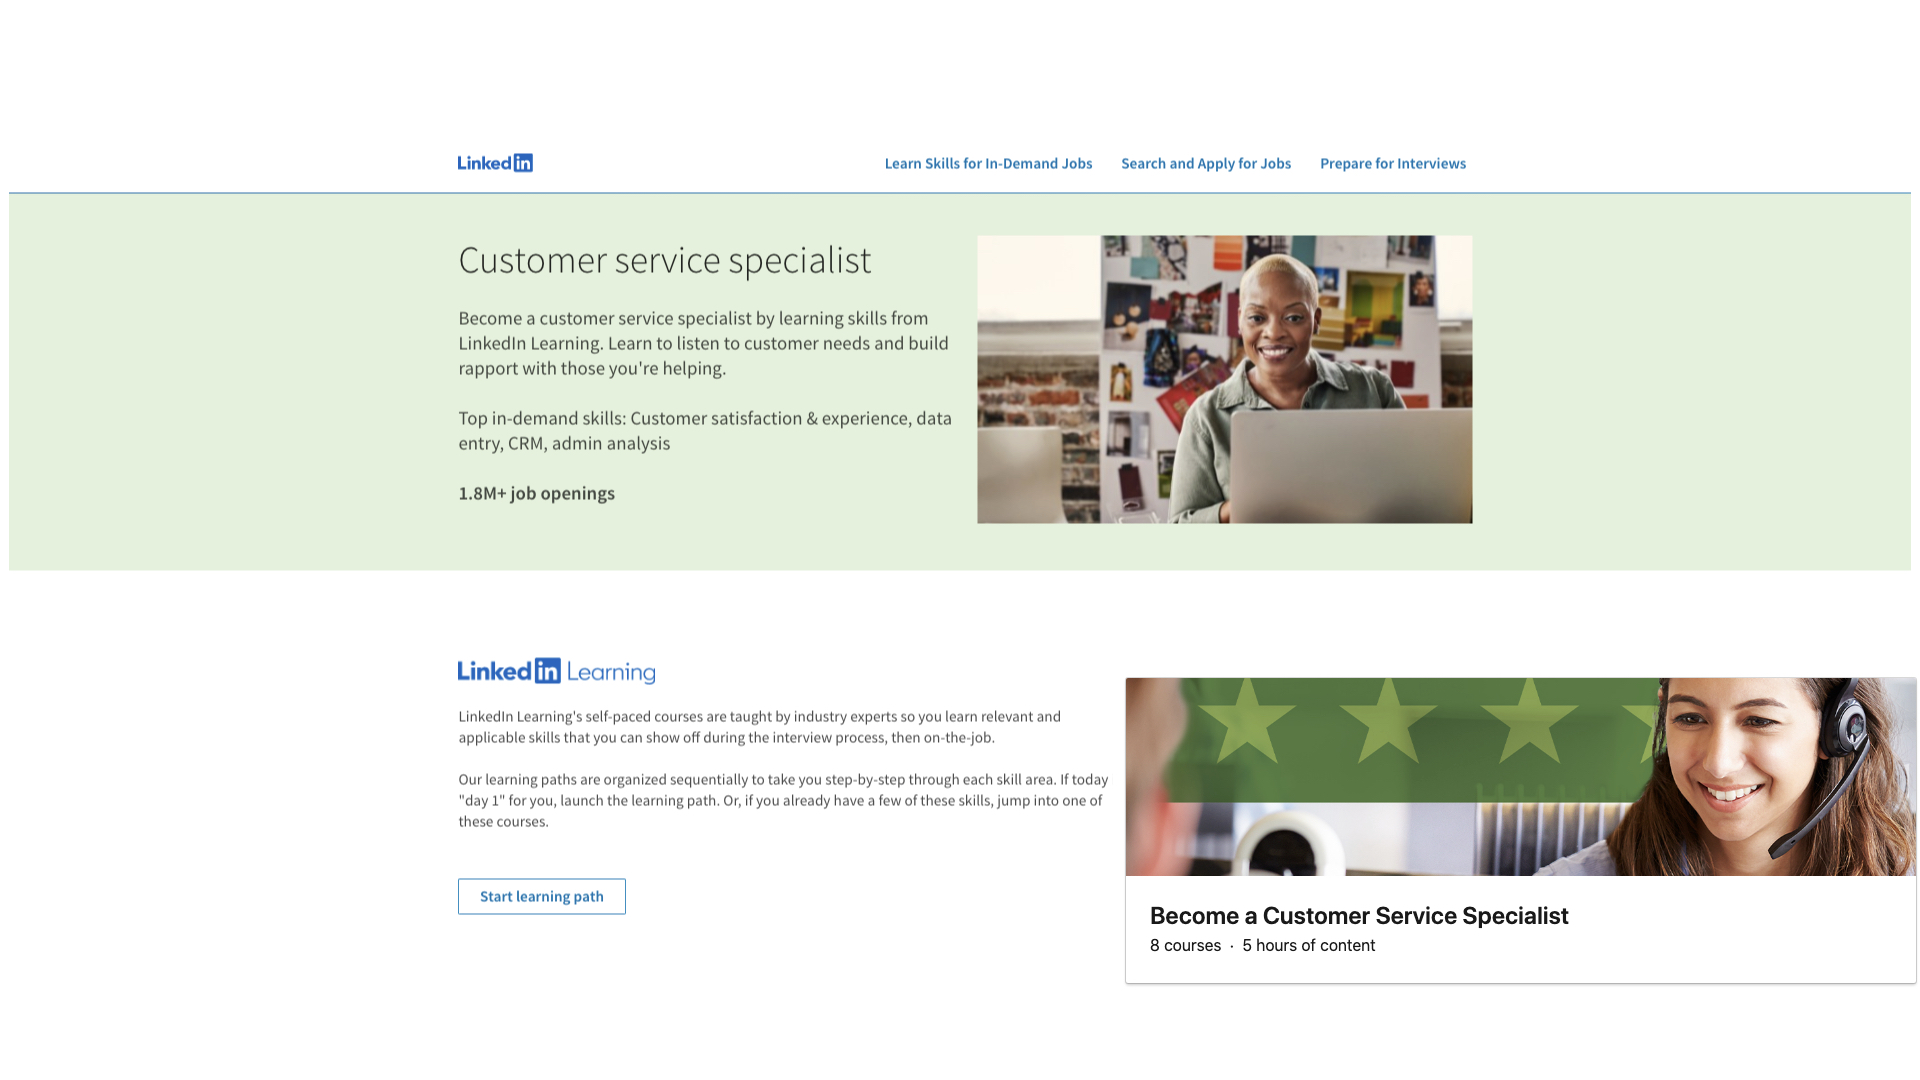 Customer service specialist path